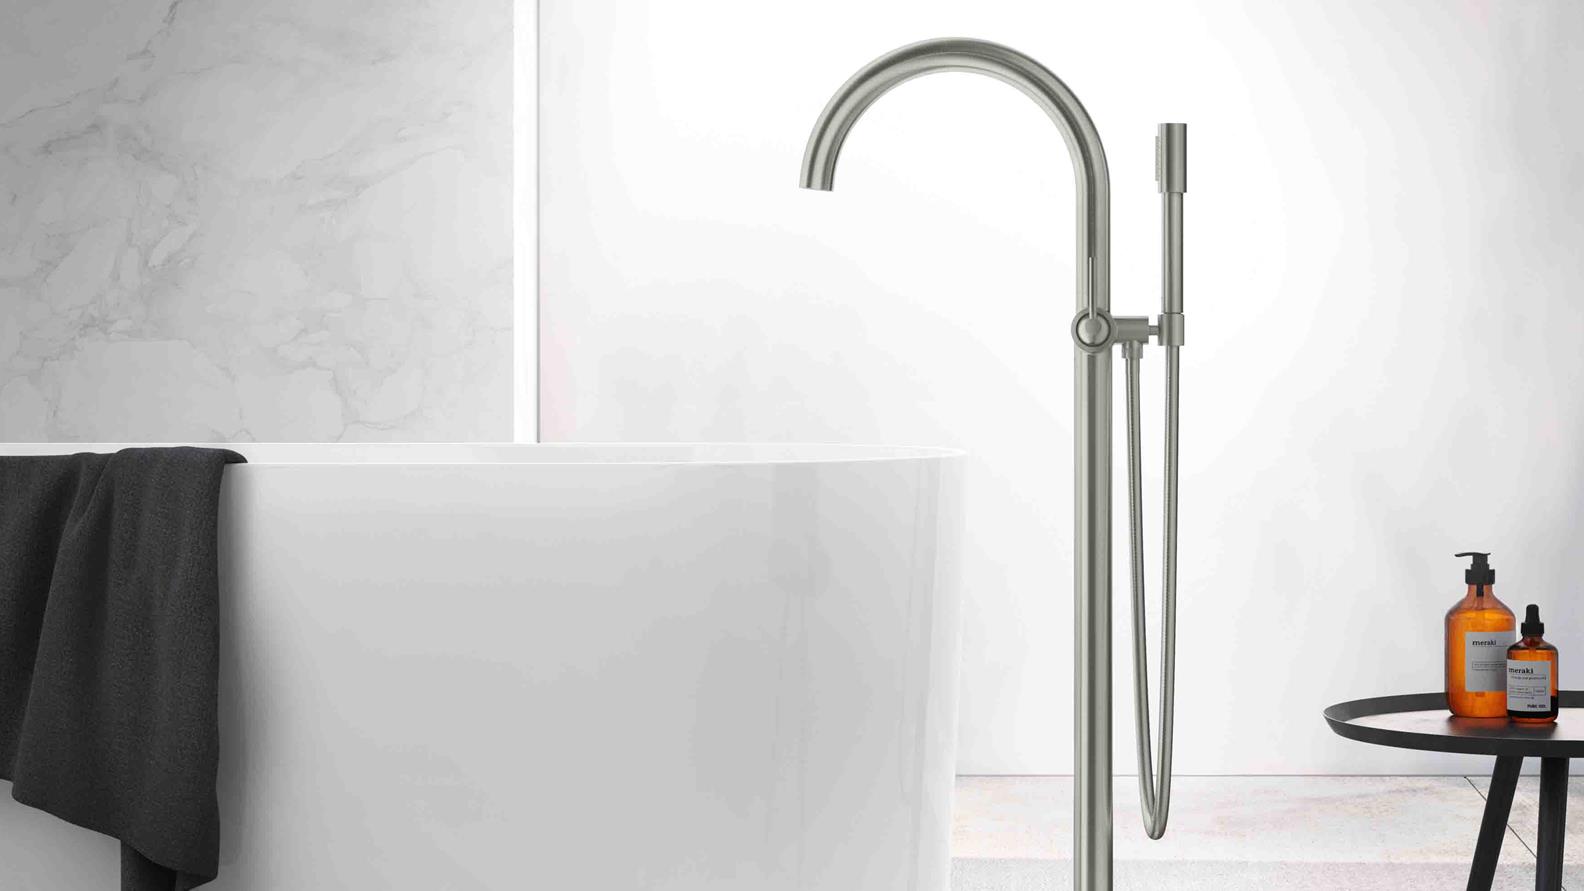 Atrio_freestanding bathtube faucet